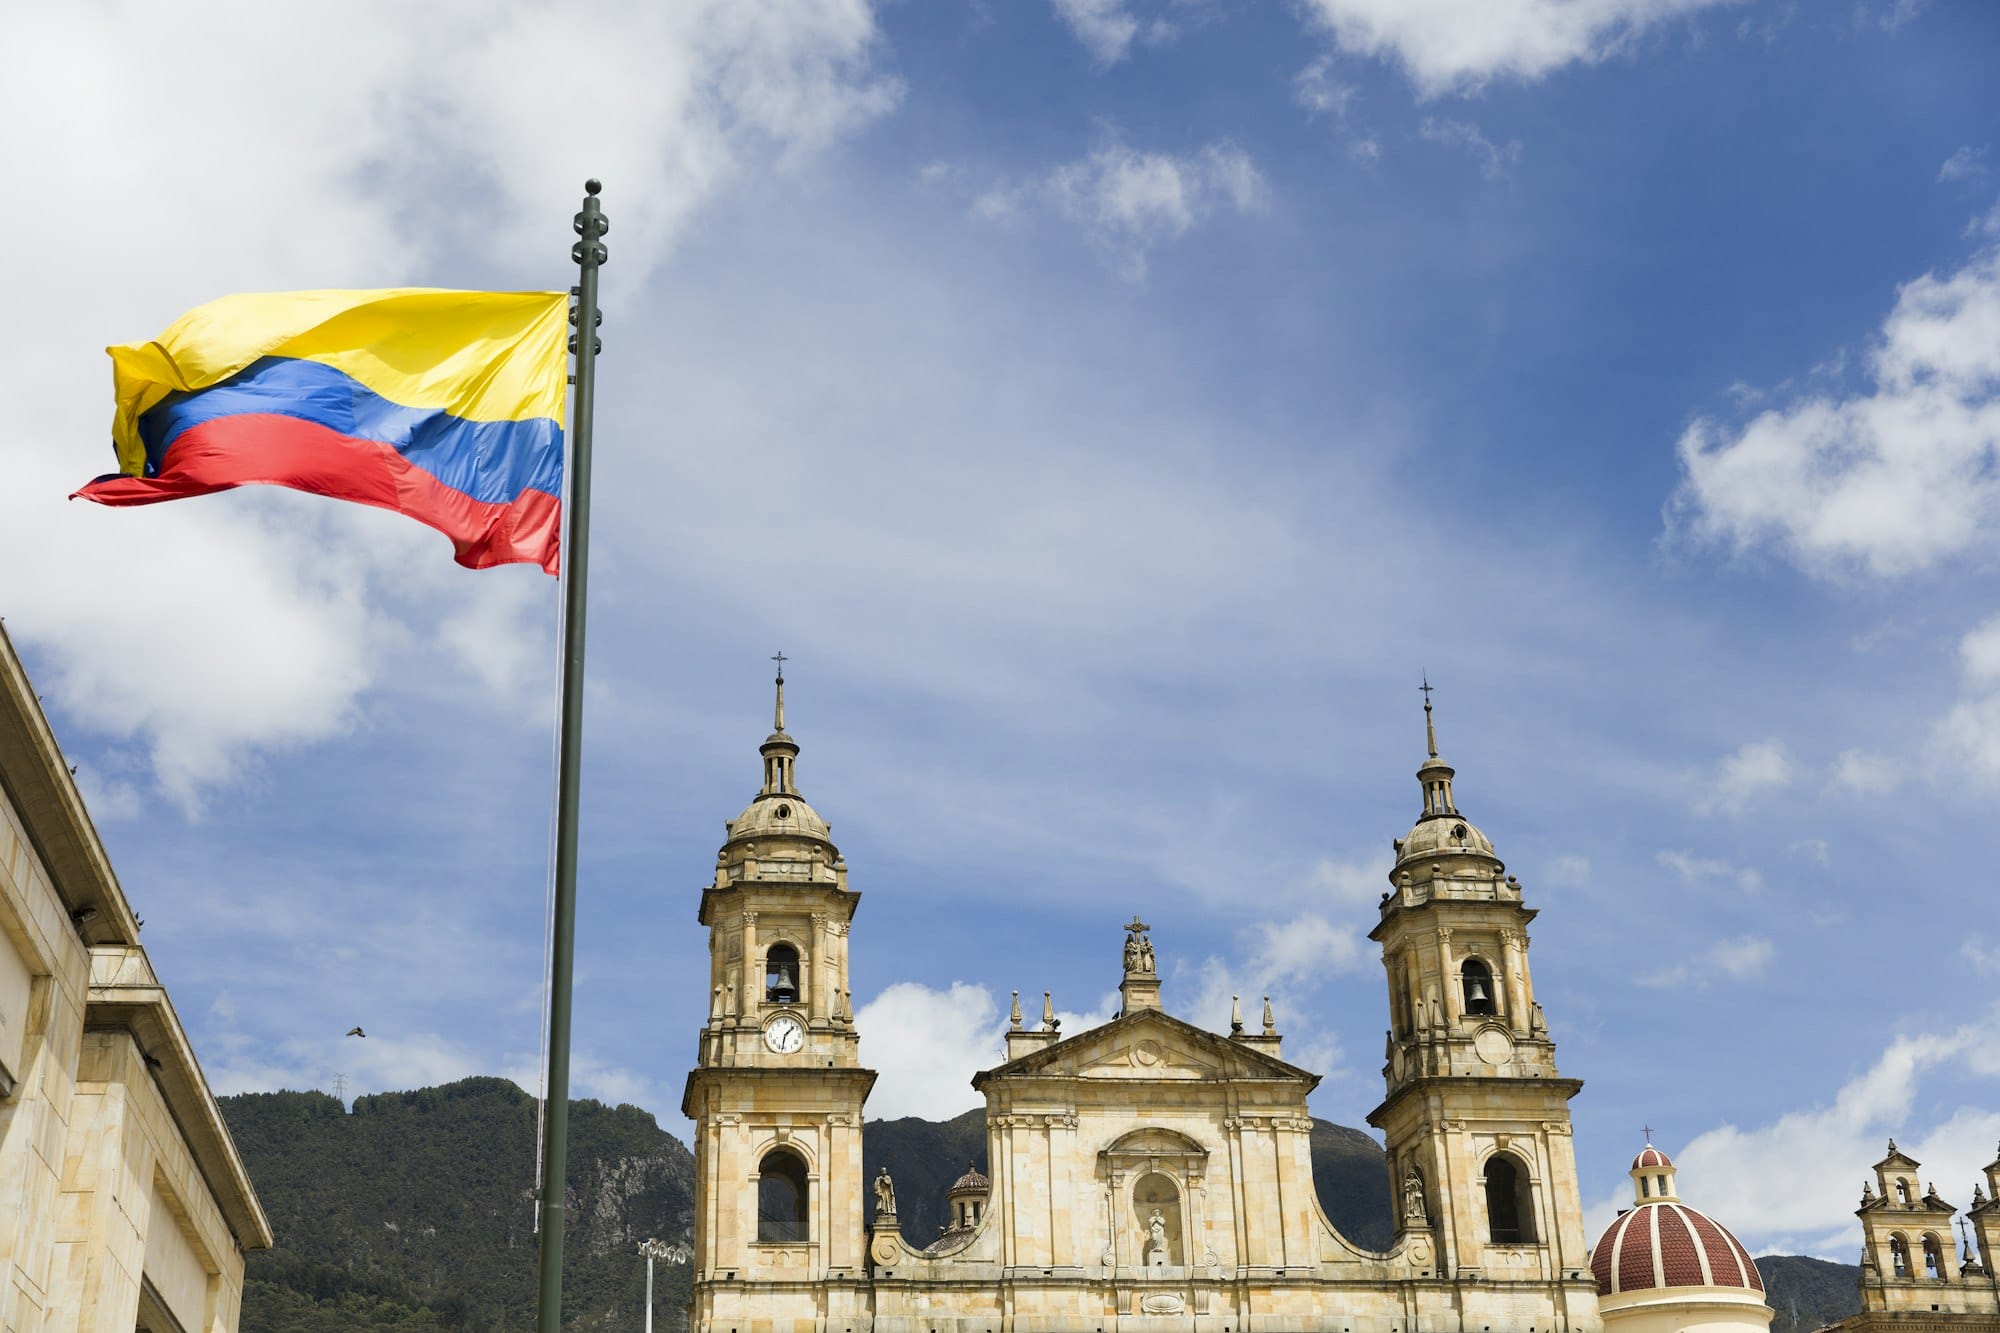 Cathedral Metropolitan Basilica of Bogota in Colombia